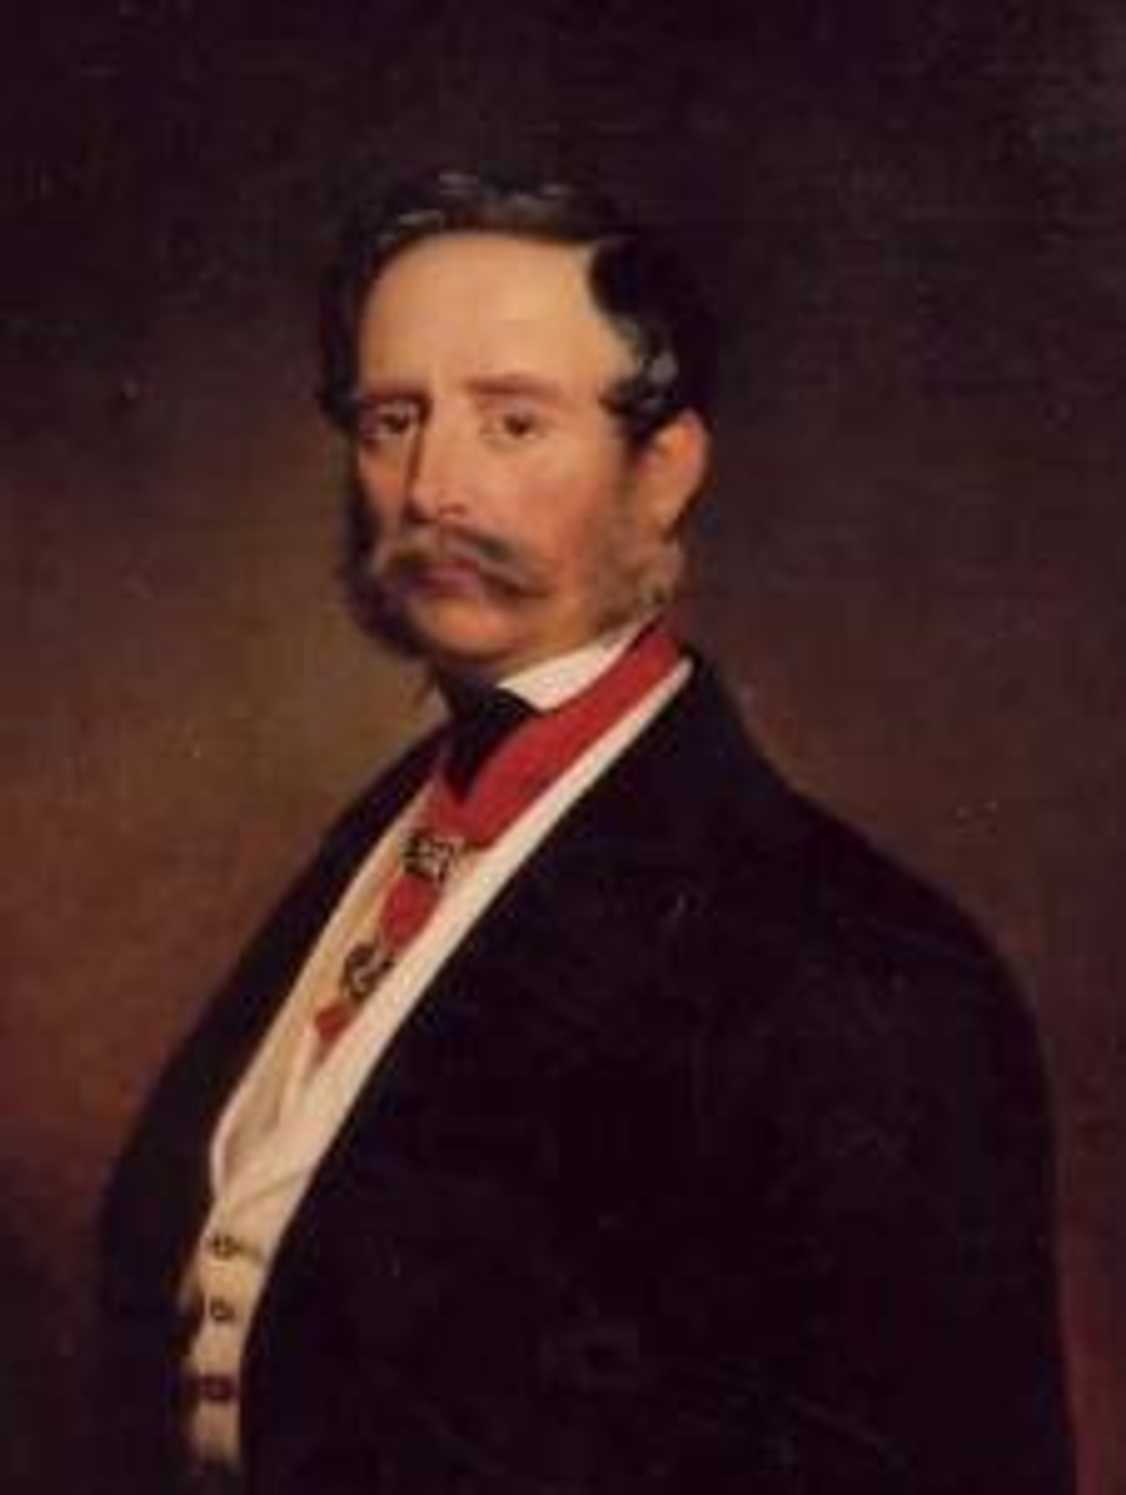 Hugo Karel Salm-Reifferscheidt-Raitz (1803–1888)
